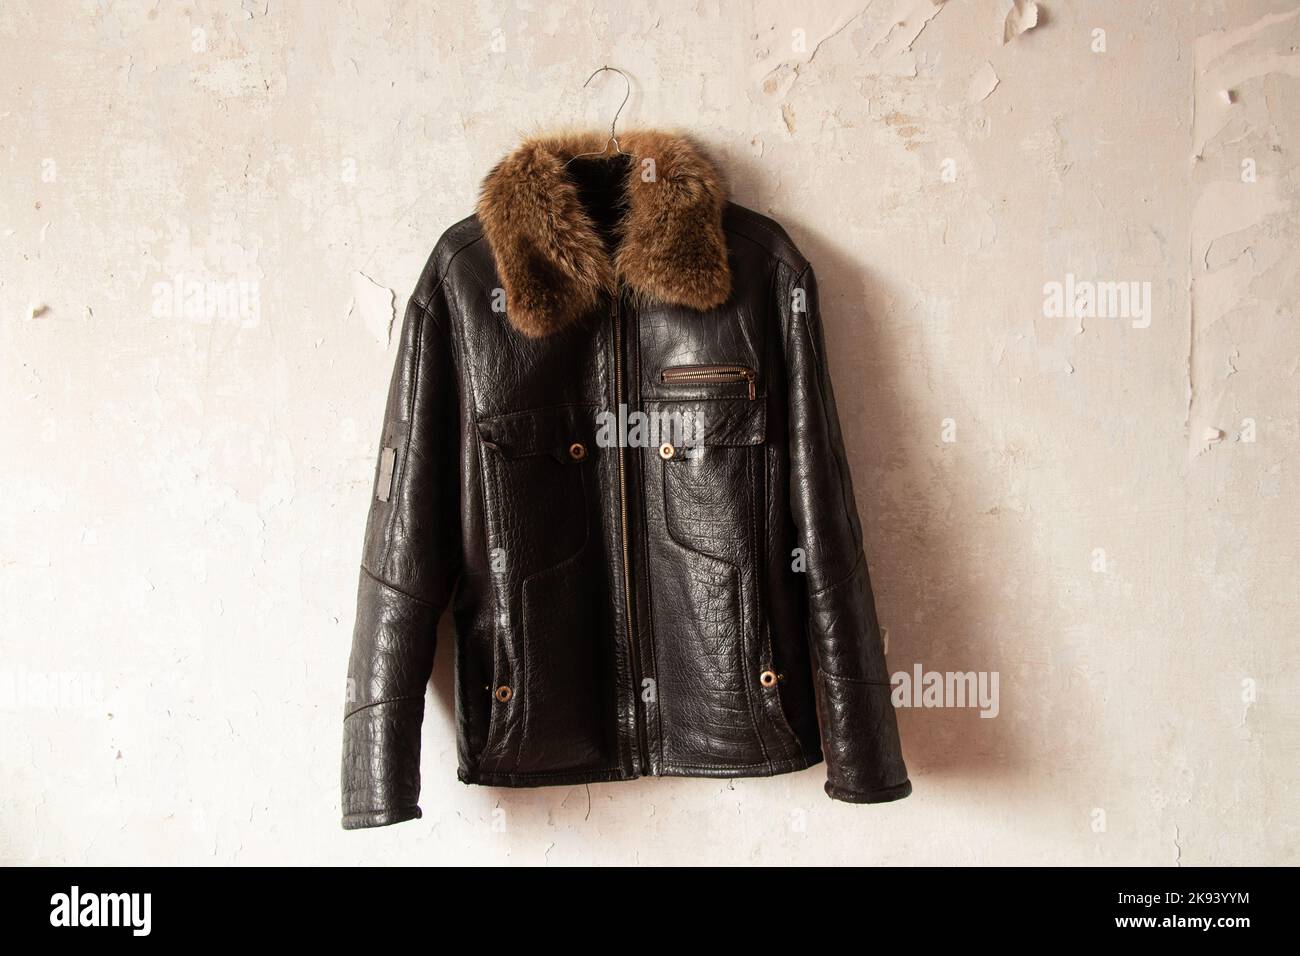 Black sheepskin jacket hi-res stock photography and images - Alamy